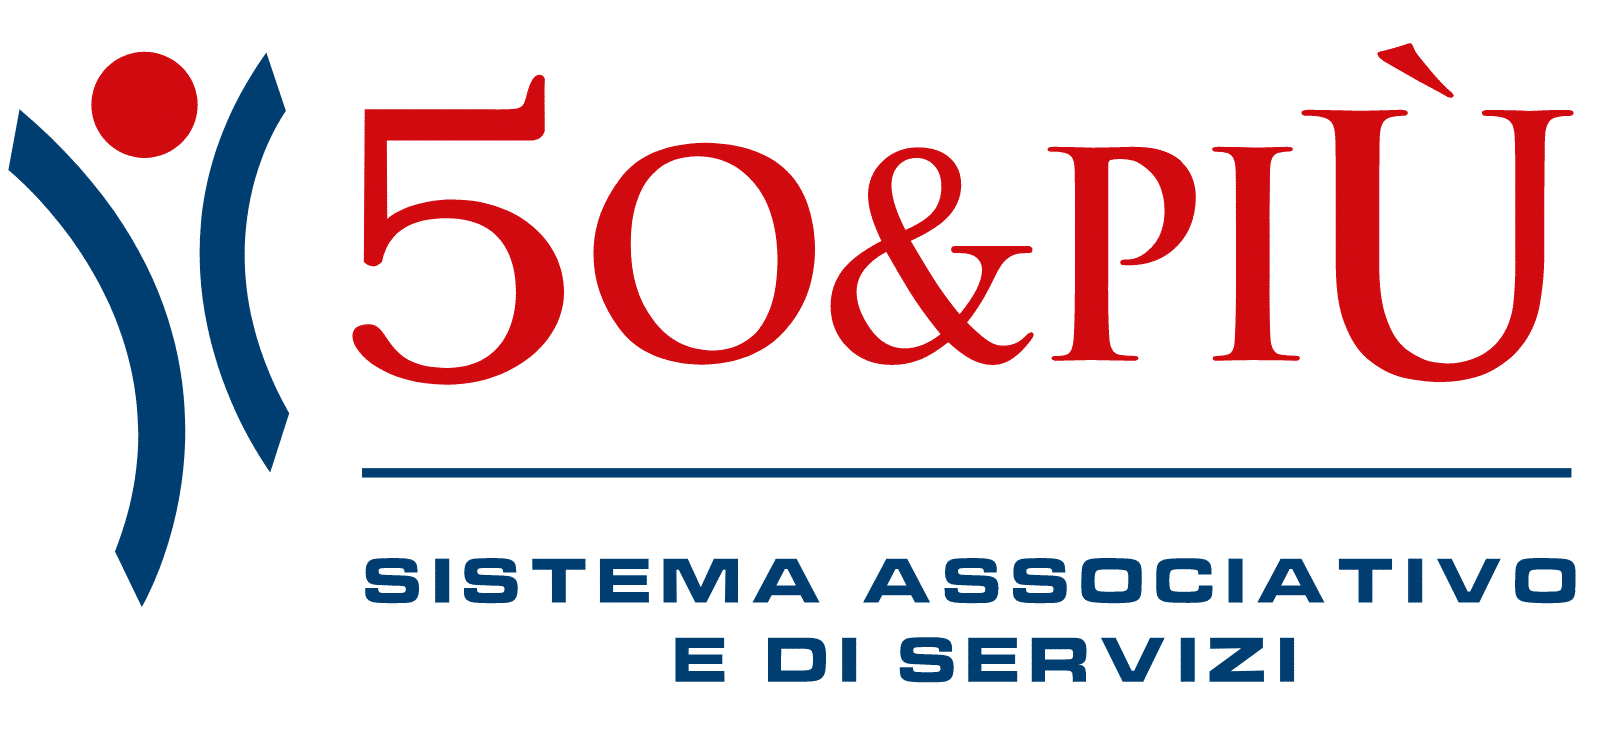 50&Piu_logo